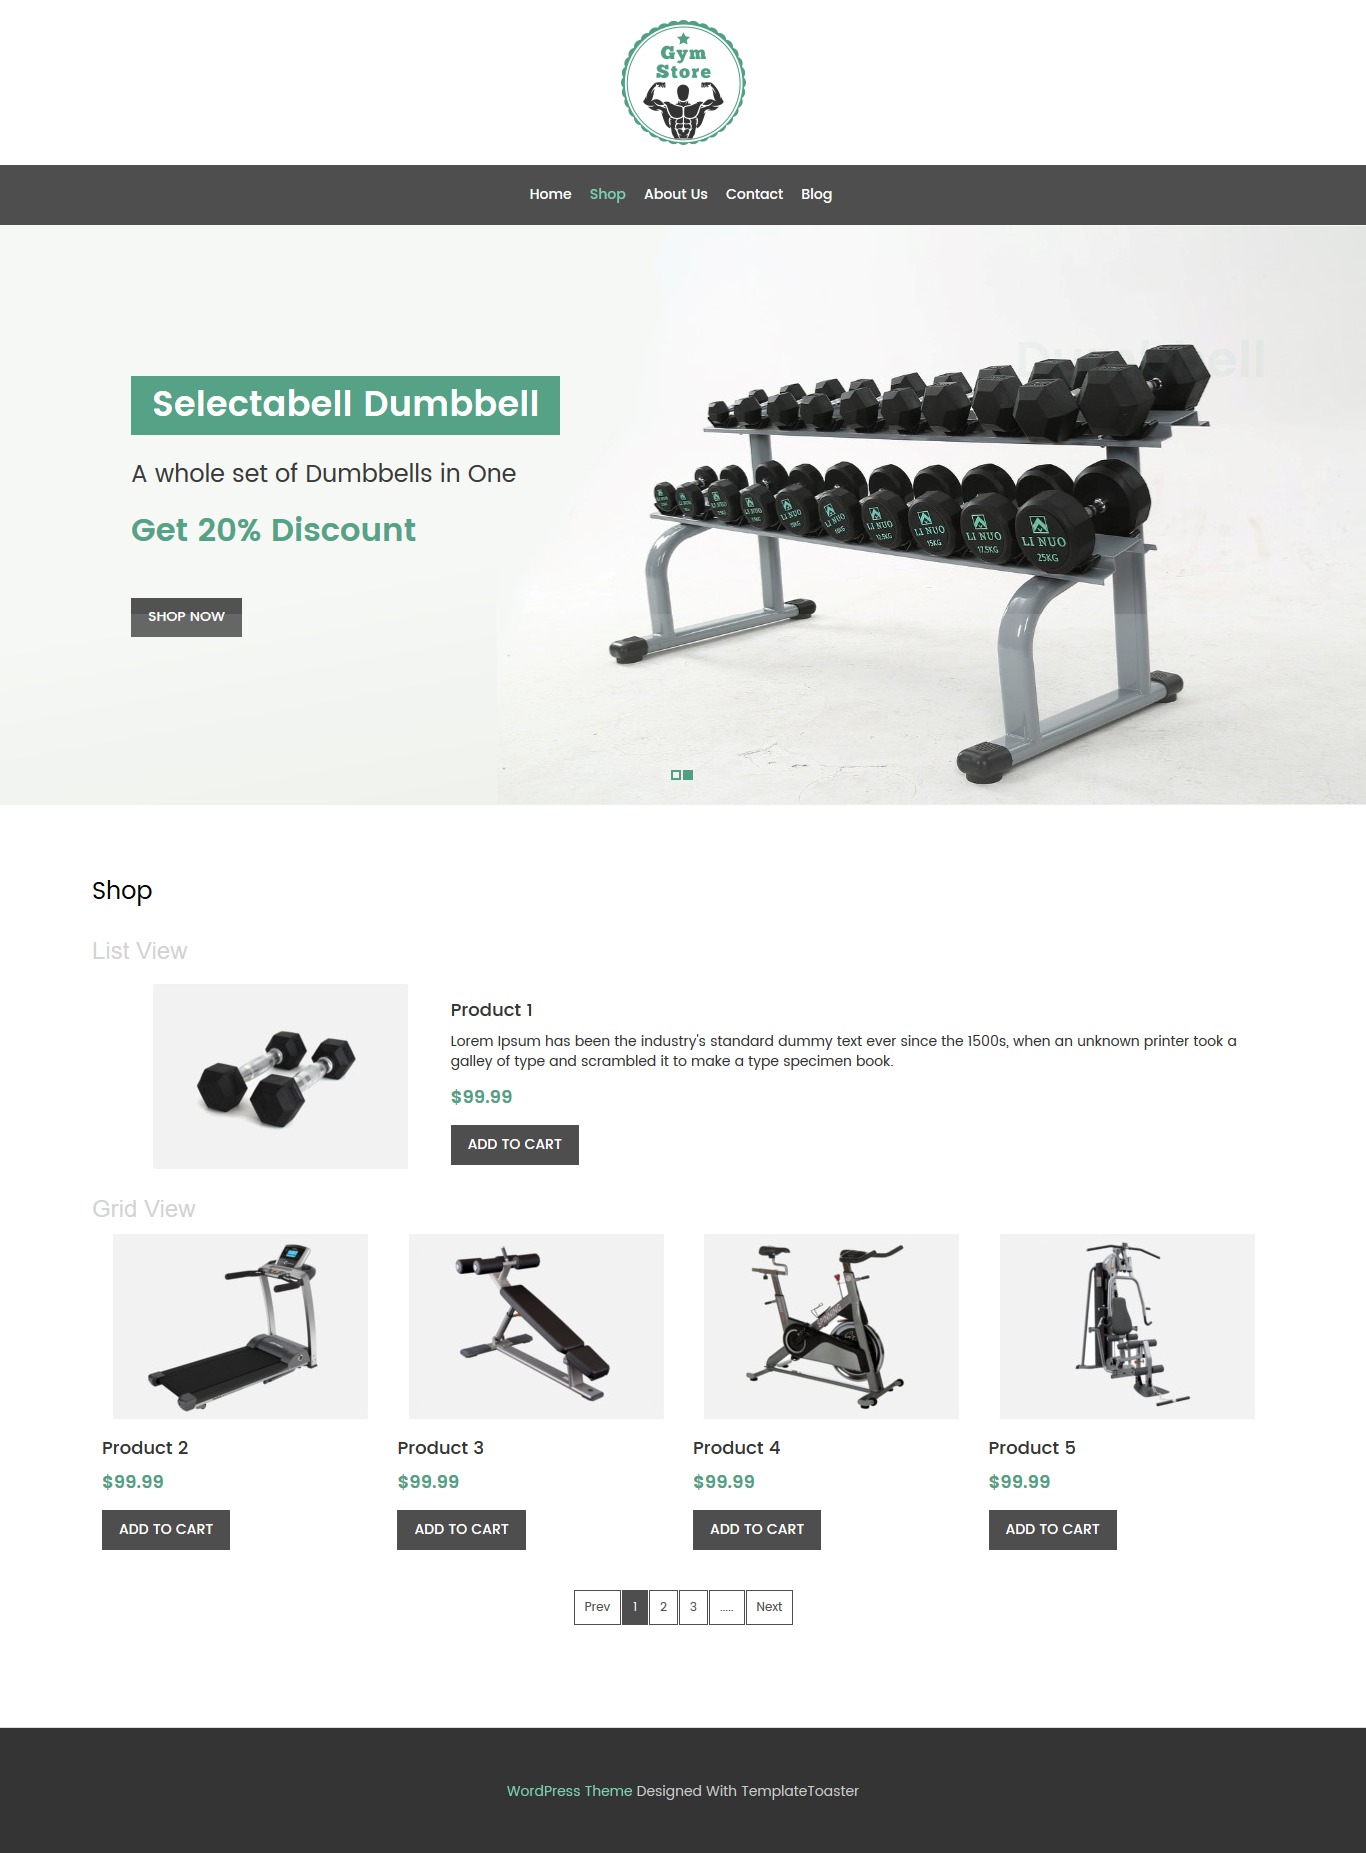 Viool Migratie koken Gym Store - Fitness Equipment Shop WooCommerce Theme - TemplateToaster